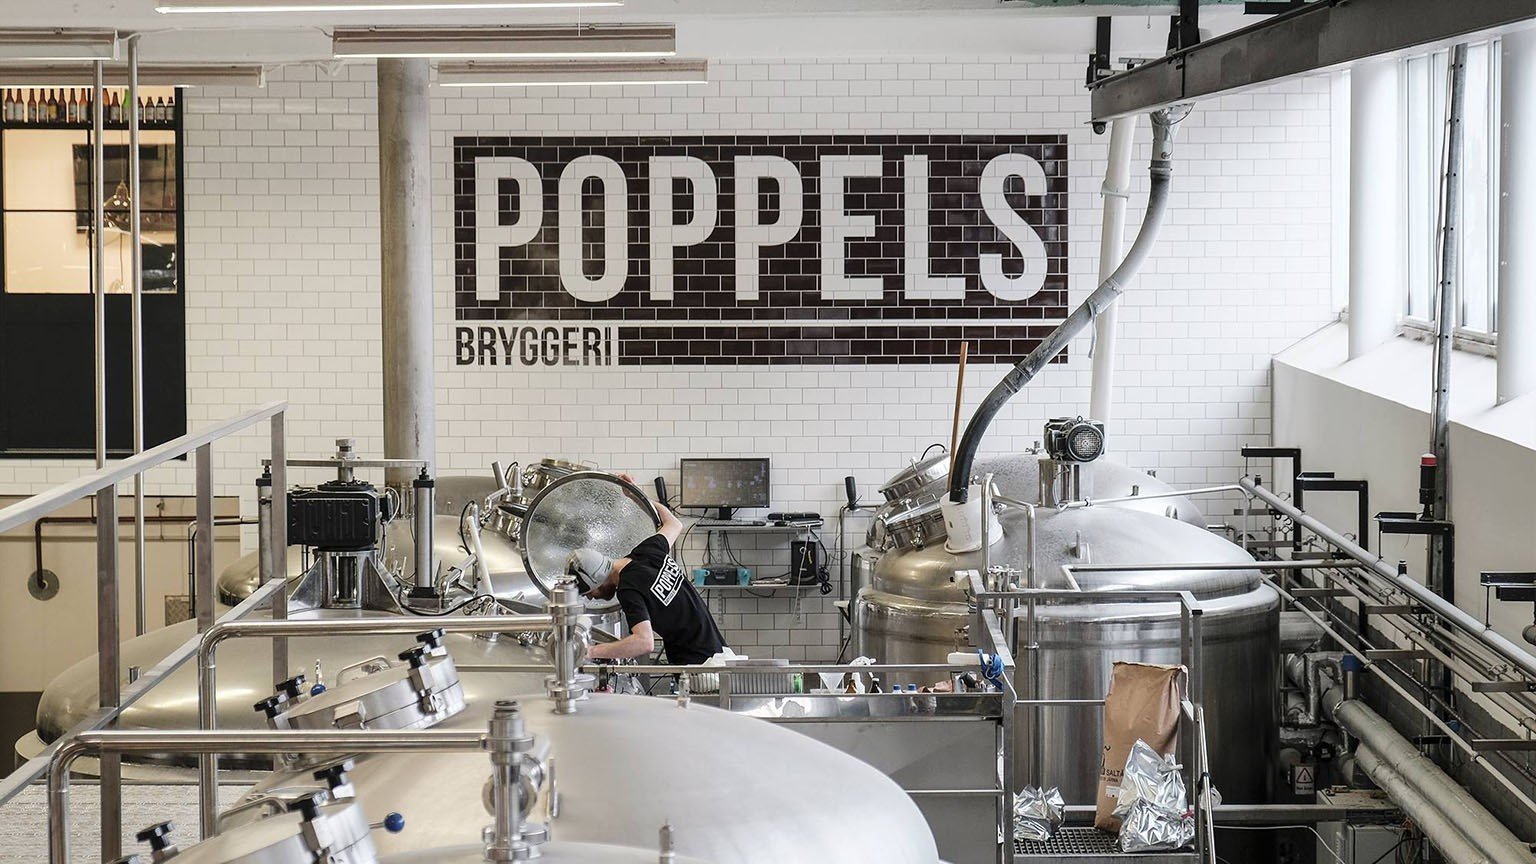 Poppels Bryggeri brewery from Sweden